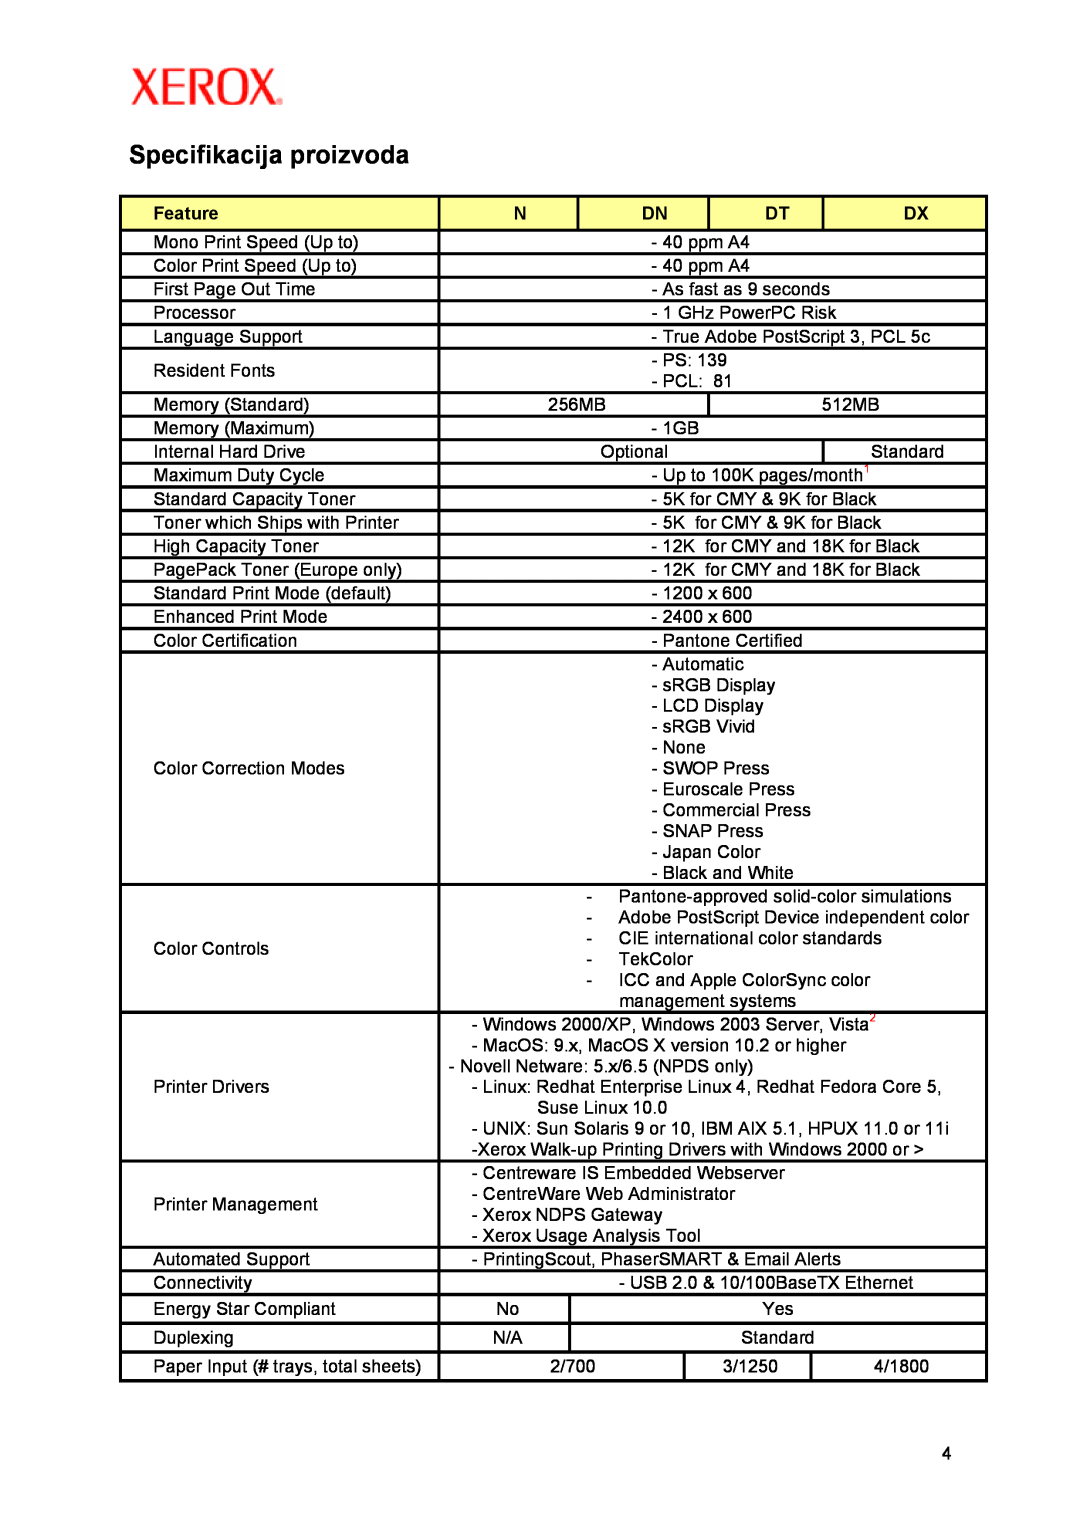 Xerox P5/ 2007 manual Specifikacija proizvoda, Feature 